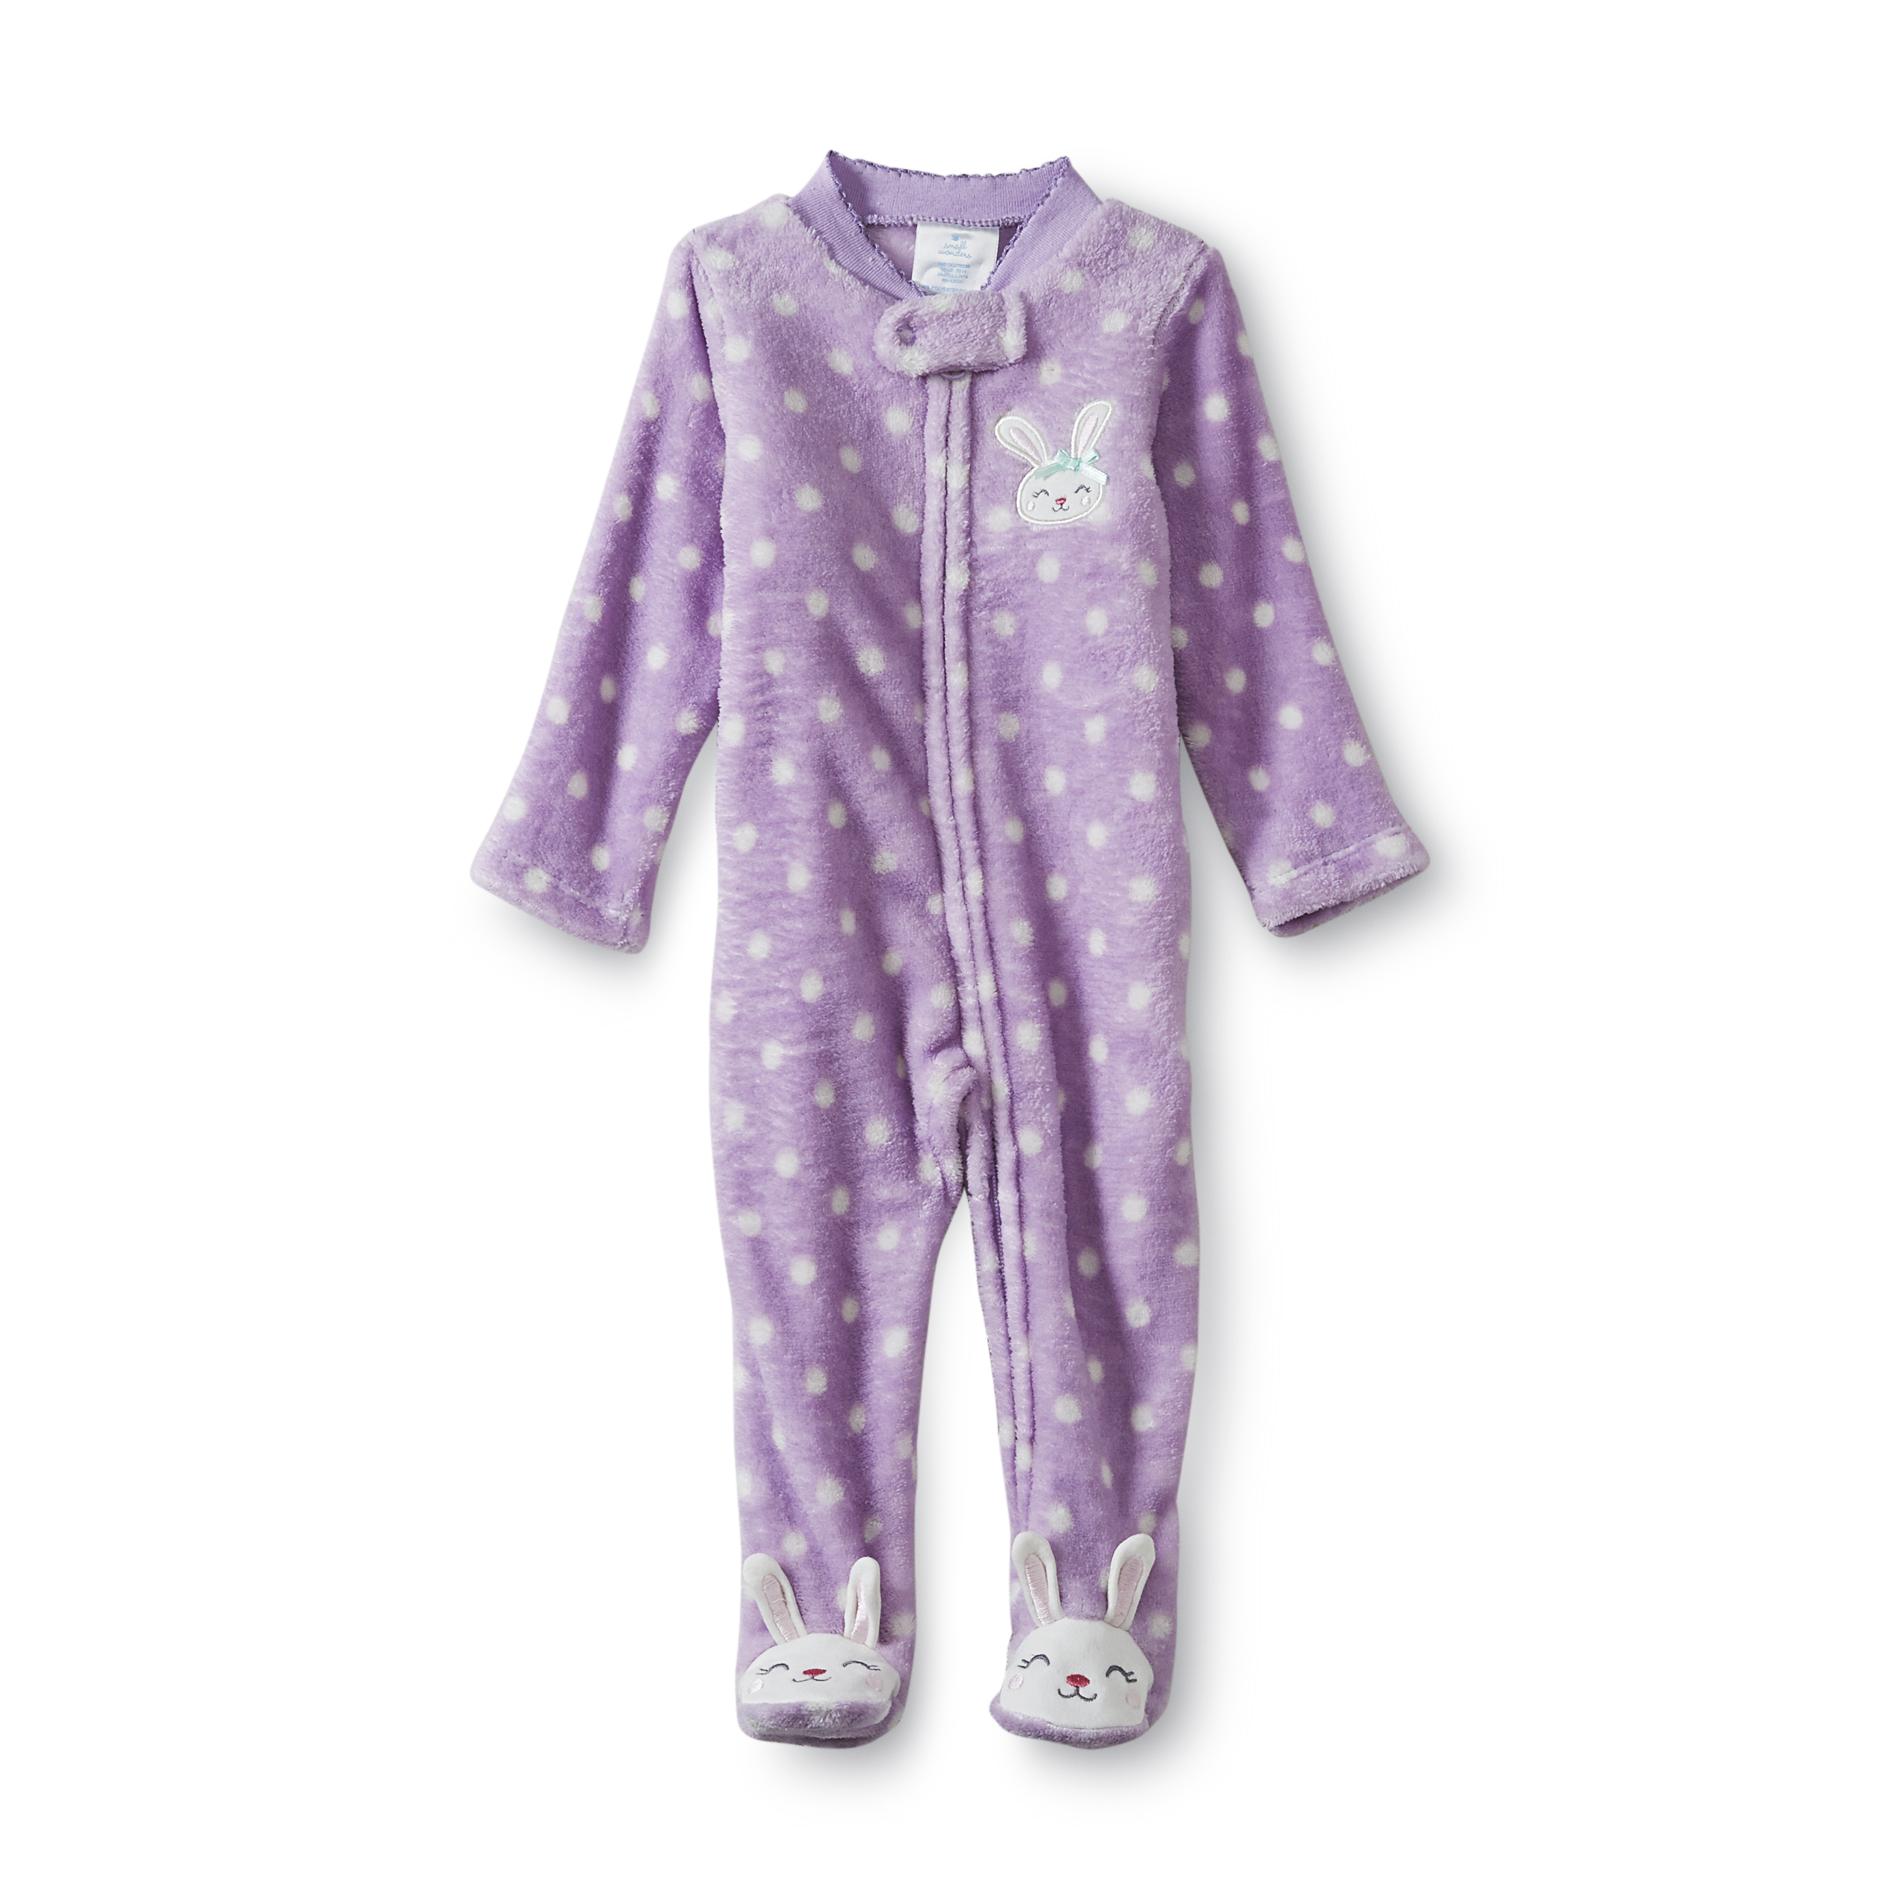 Small Wonders Newborn Girl's Fleece Footed Sleeper Pajamas - Bunny